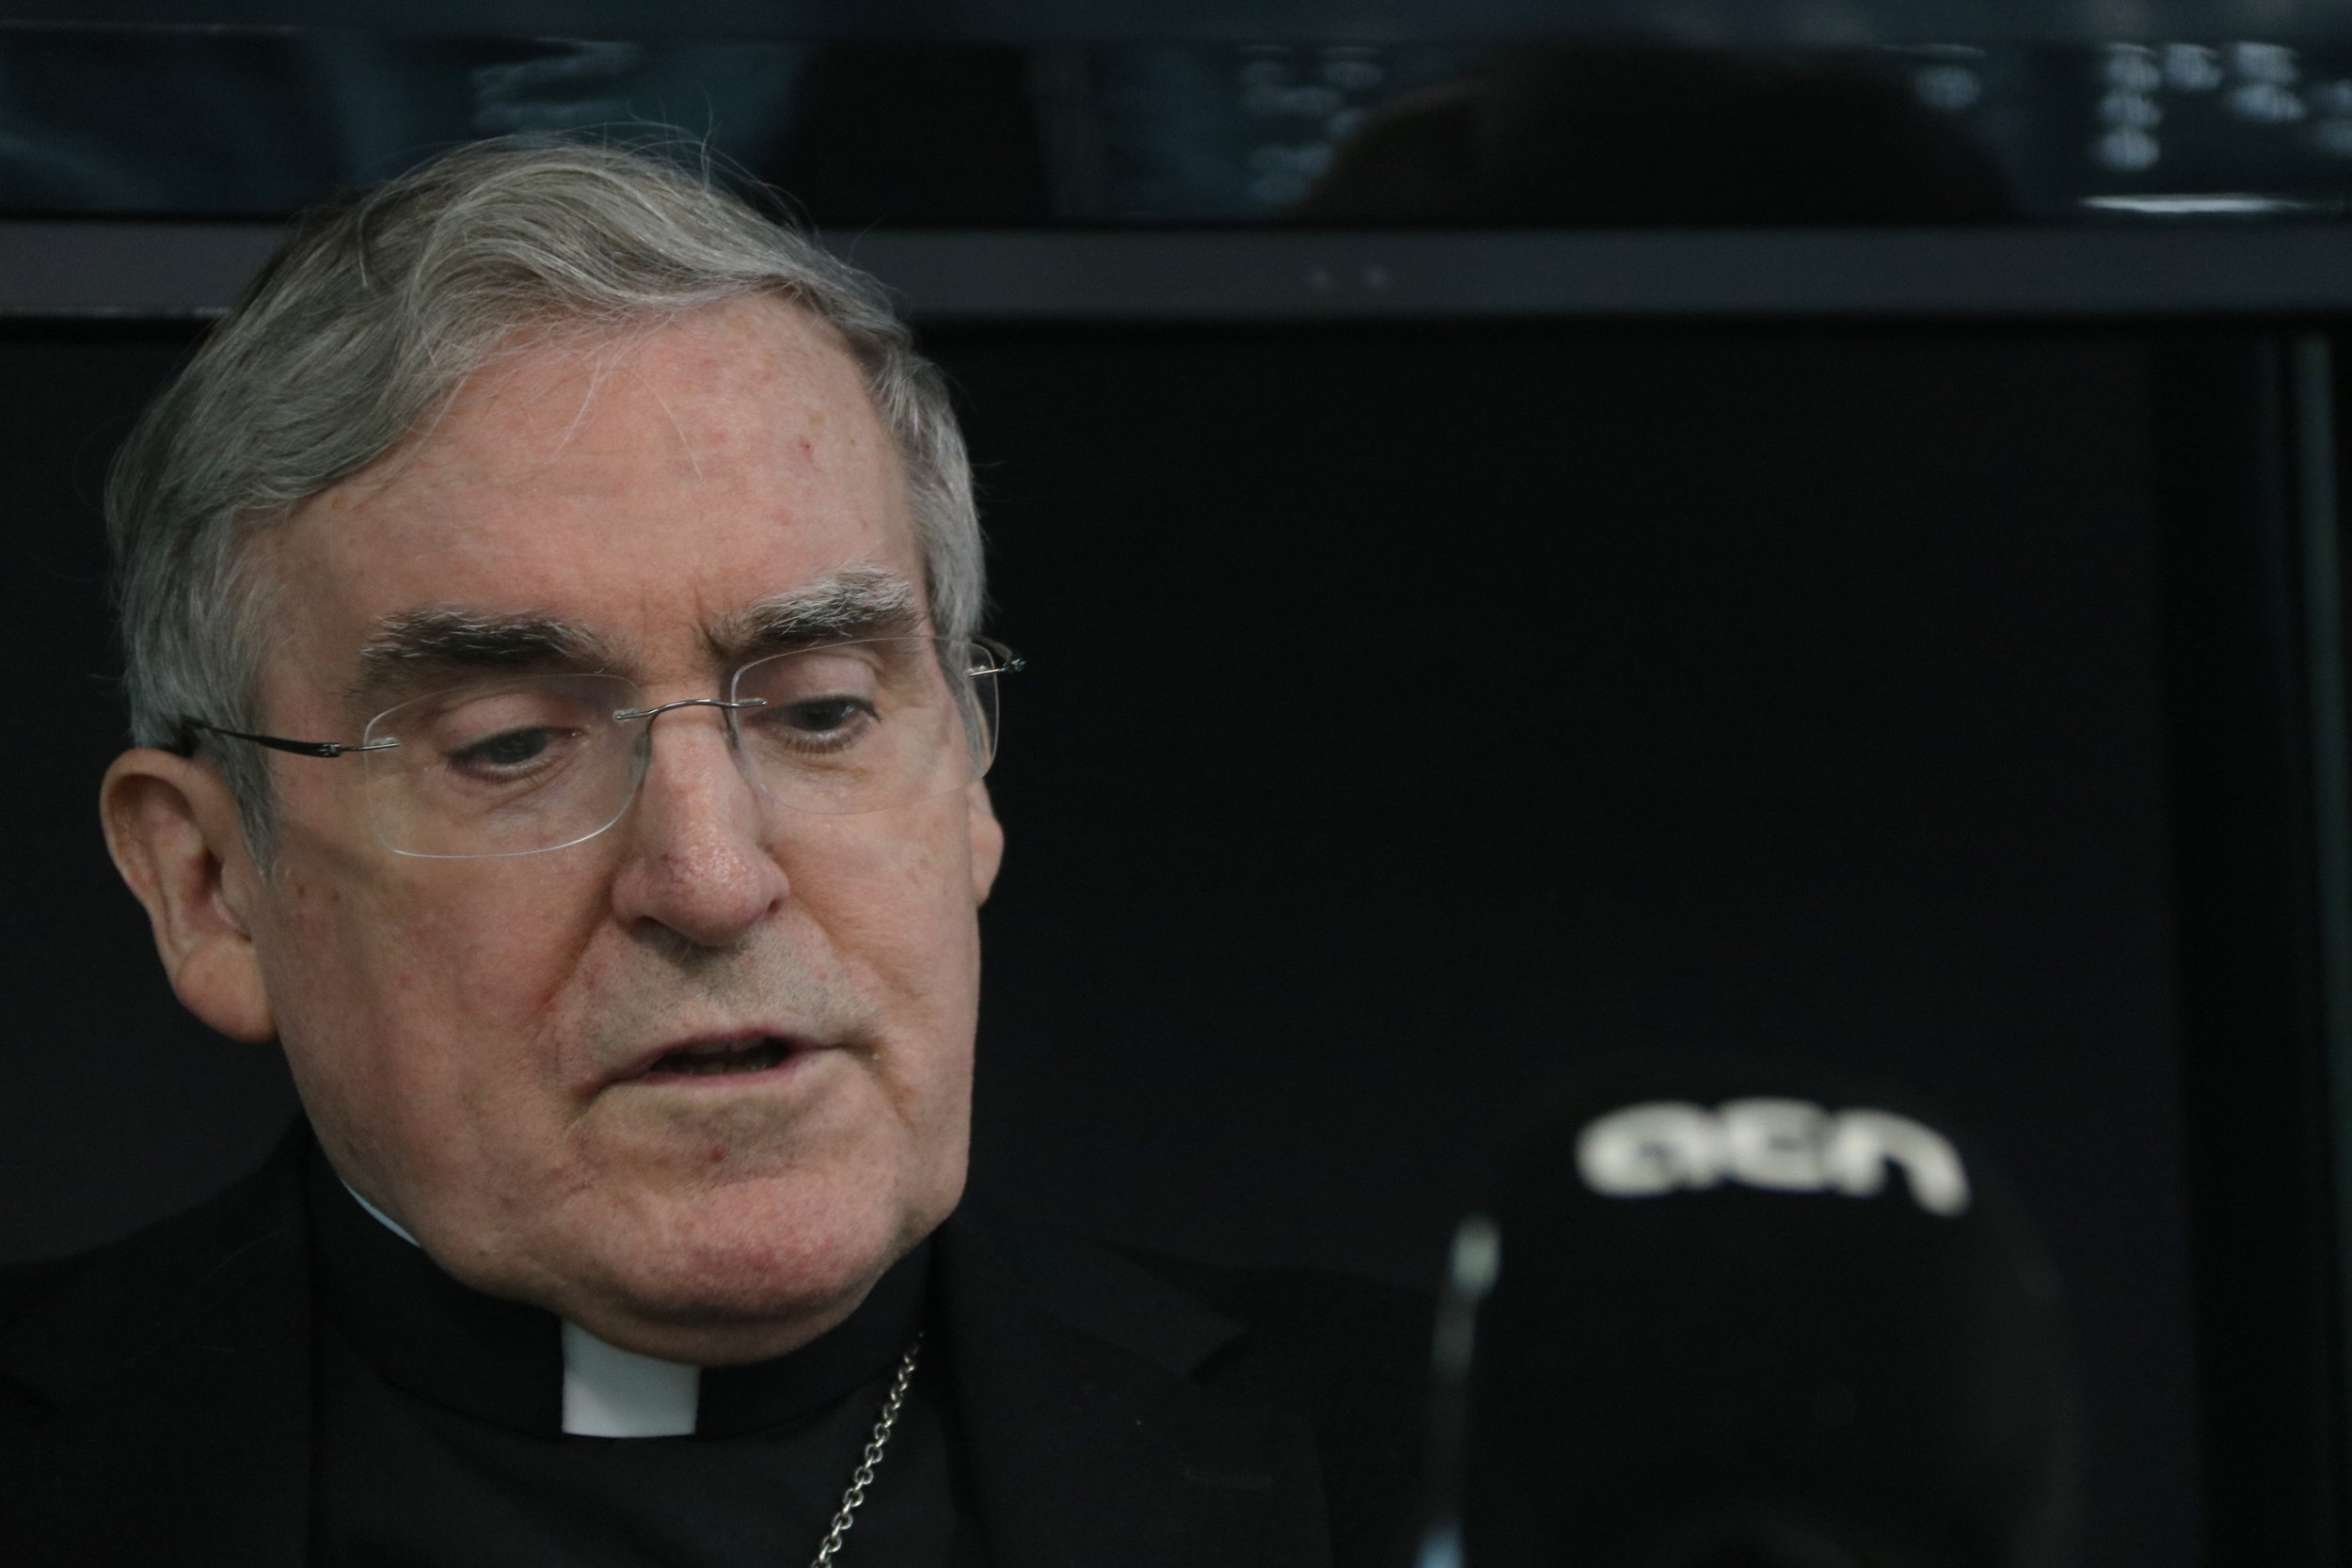 El cardenal Sistach considera "dolorosa" la presó preventiva dels polítics